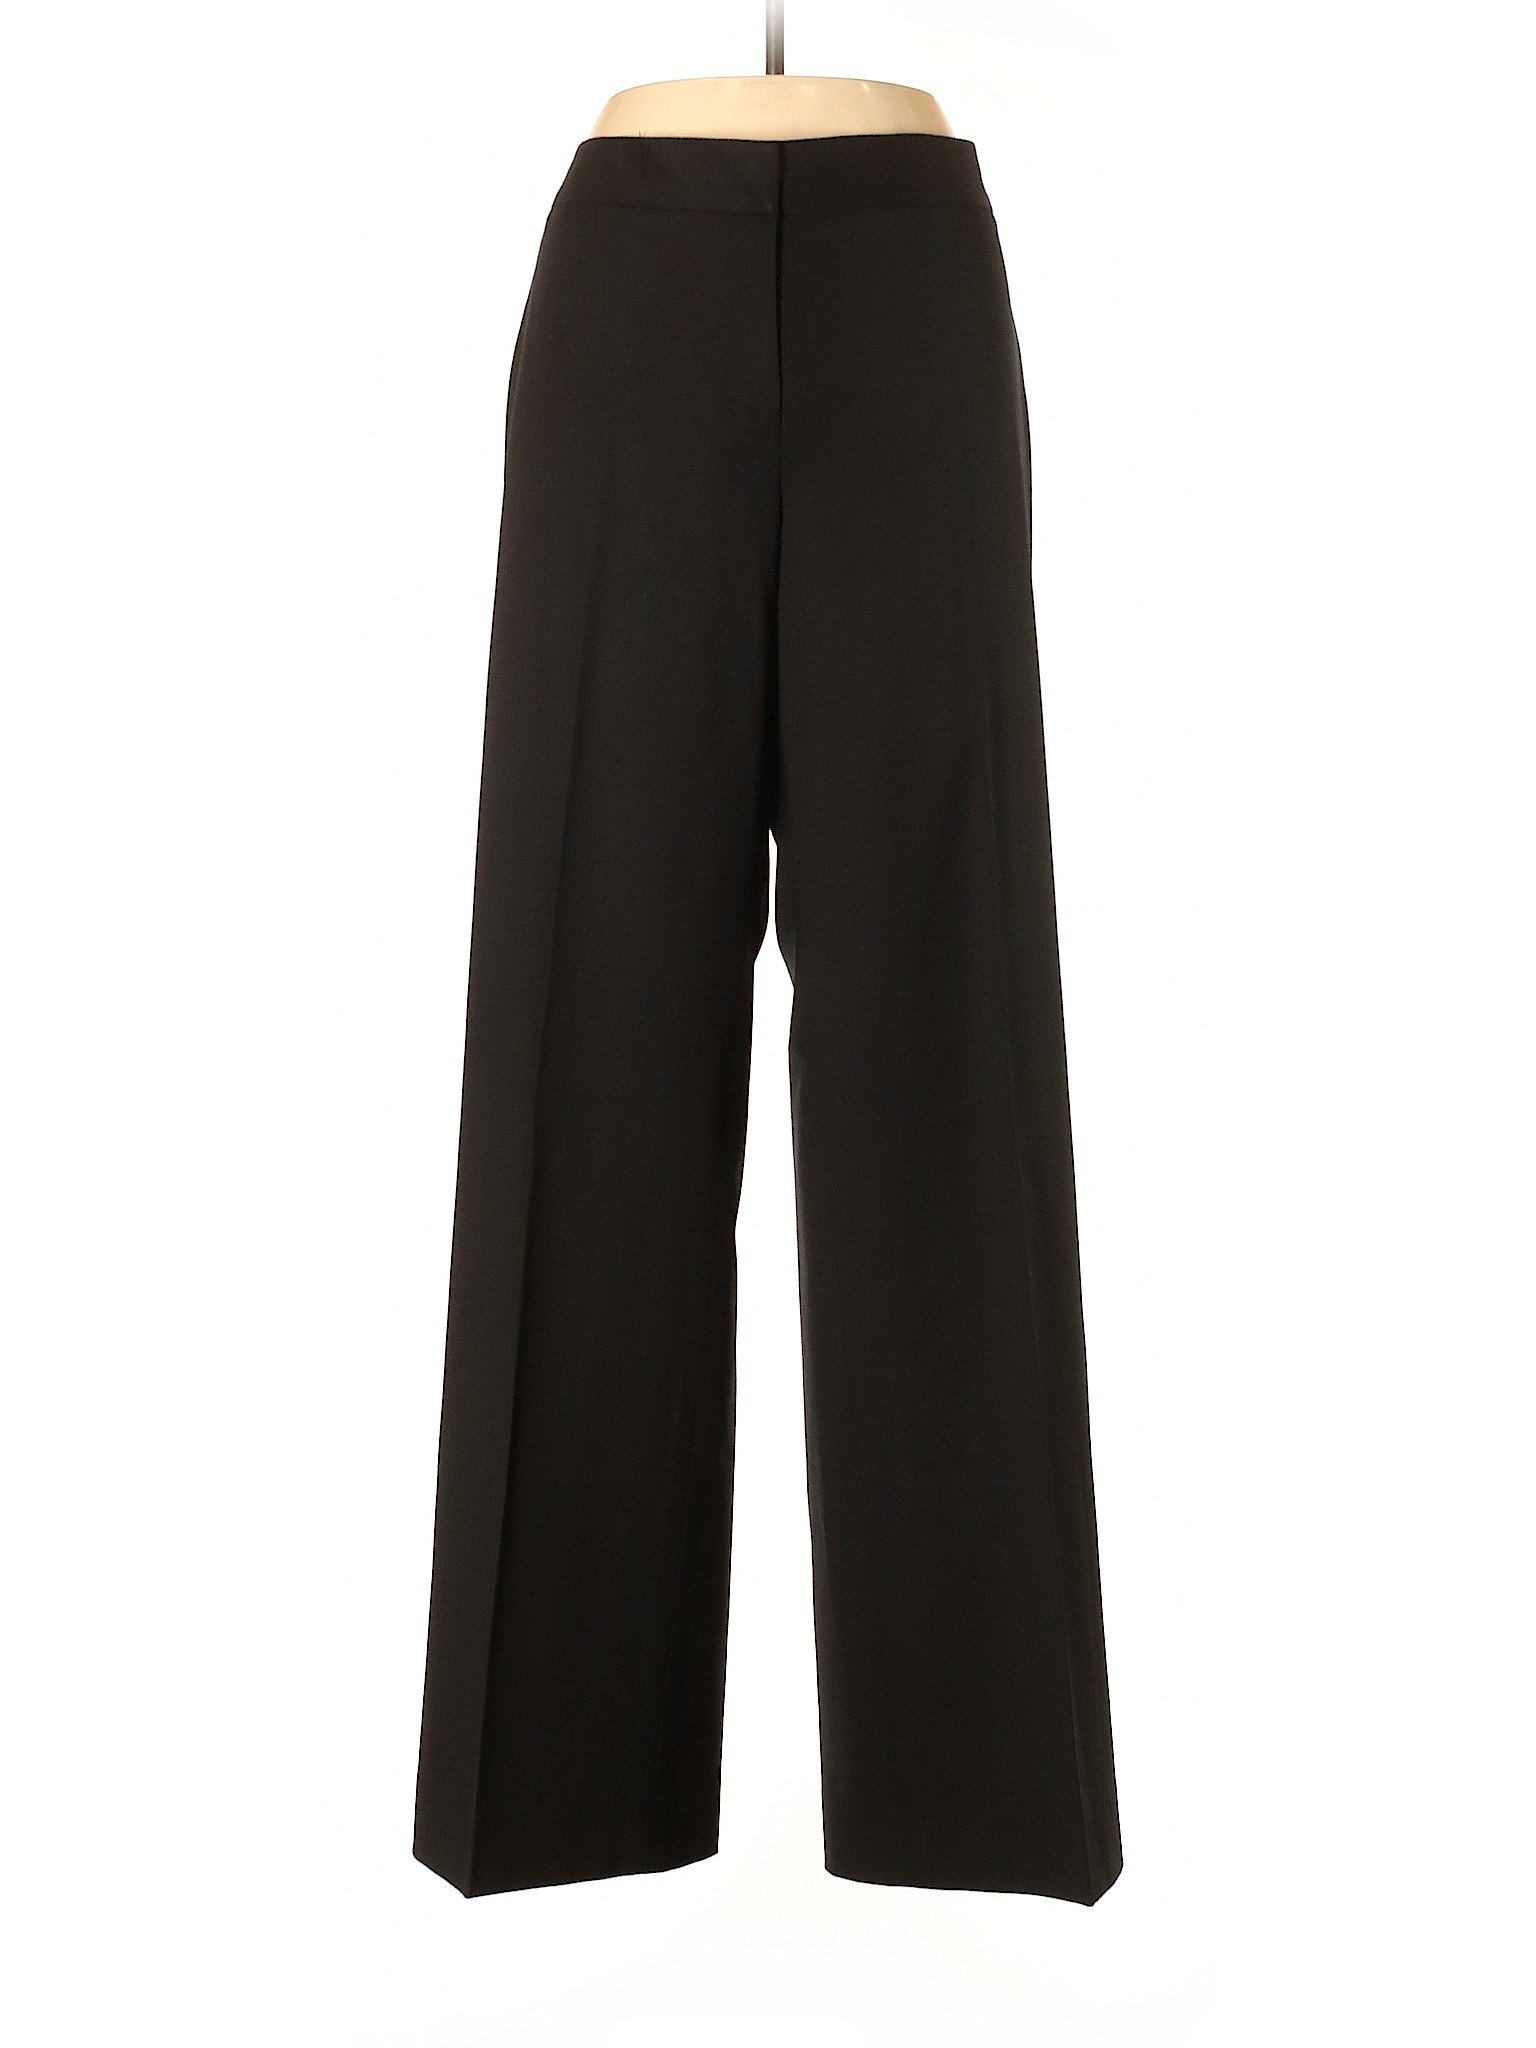 Classiques Entier Women Black Wool Pants 10 | eBay